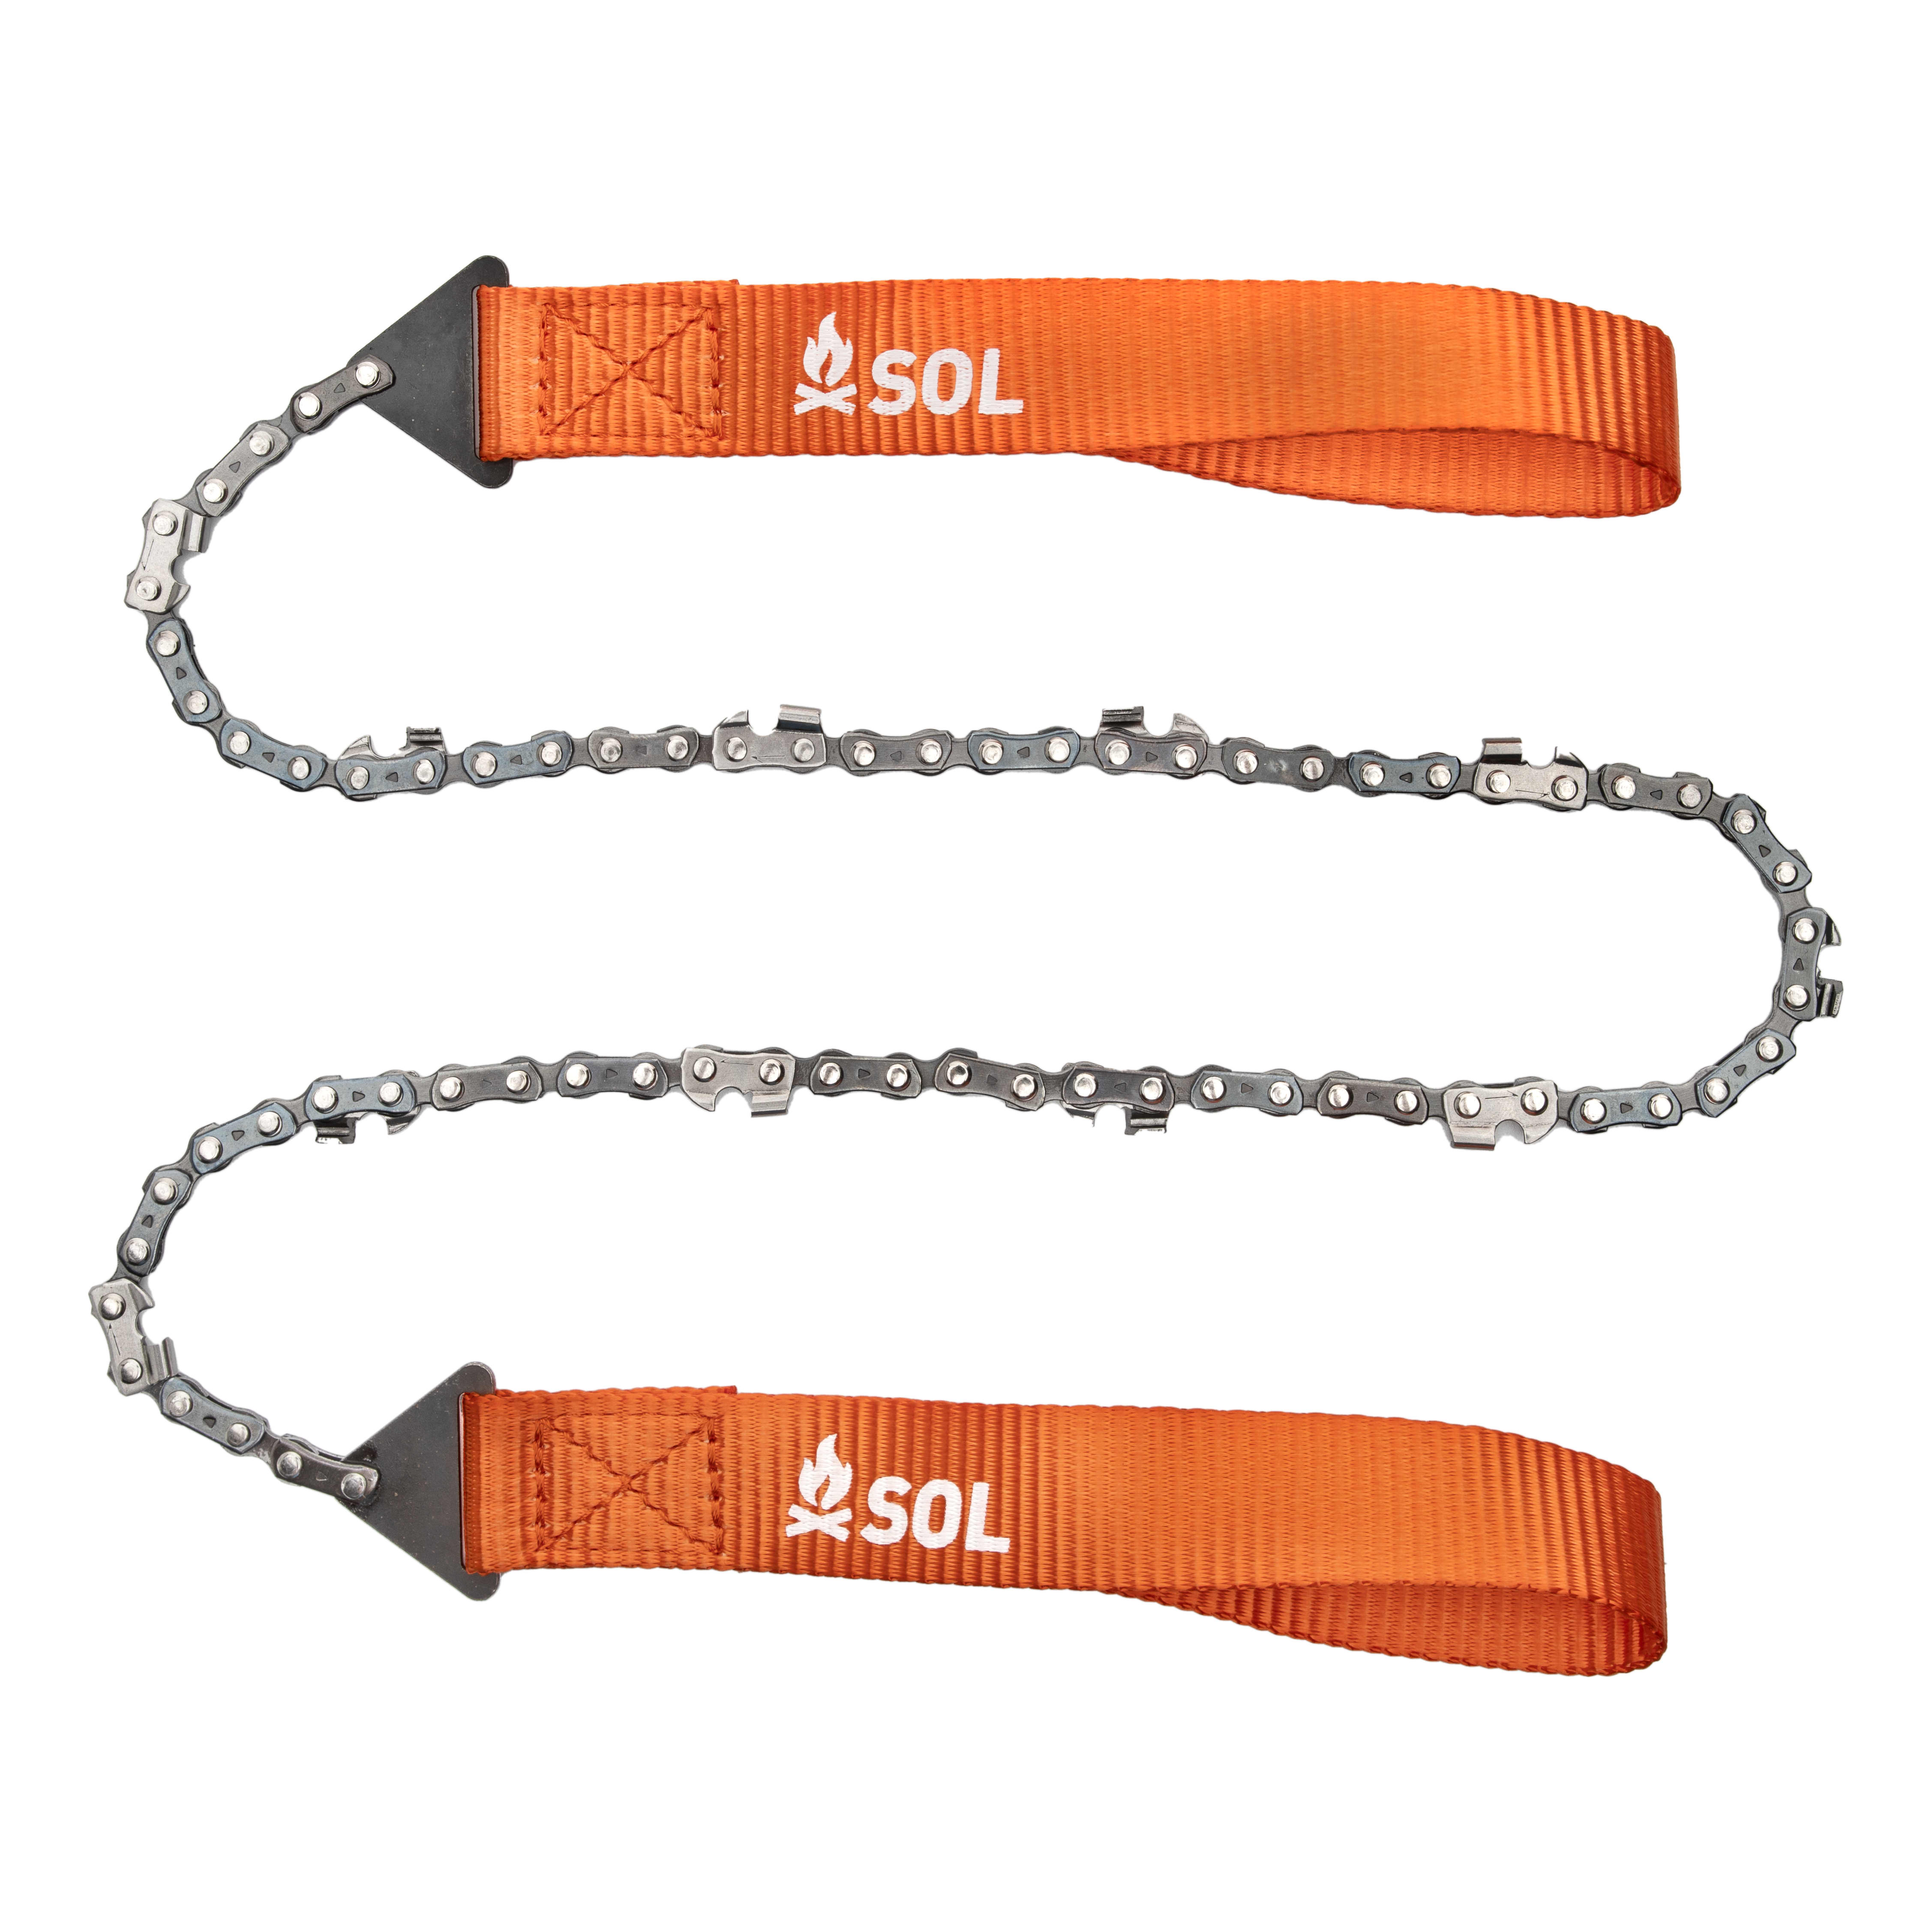 S.O.L.® Pocket Chain Saw